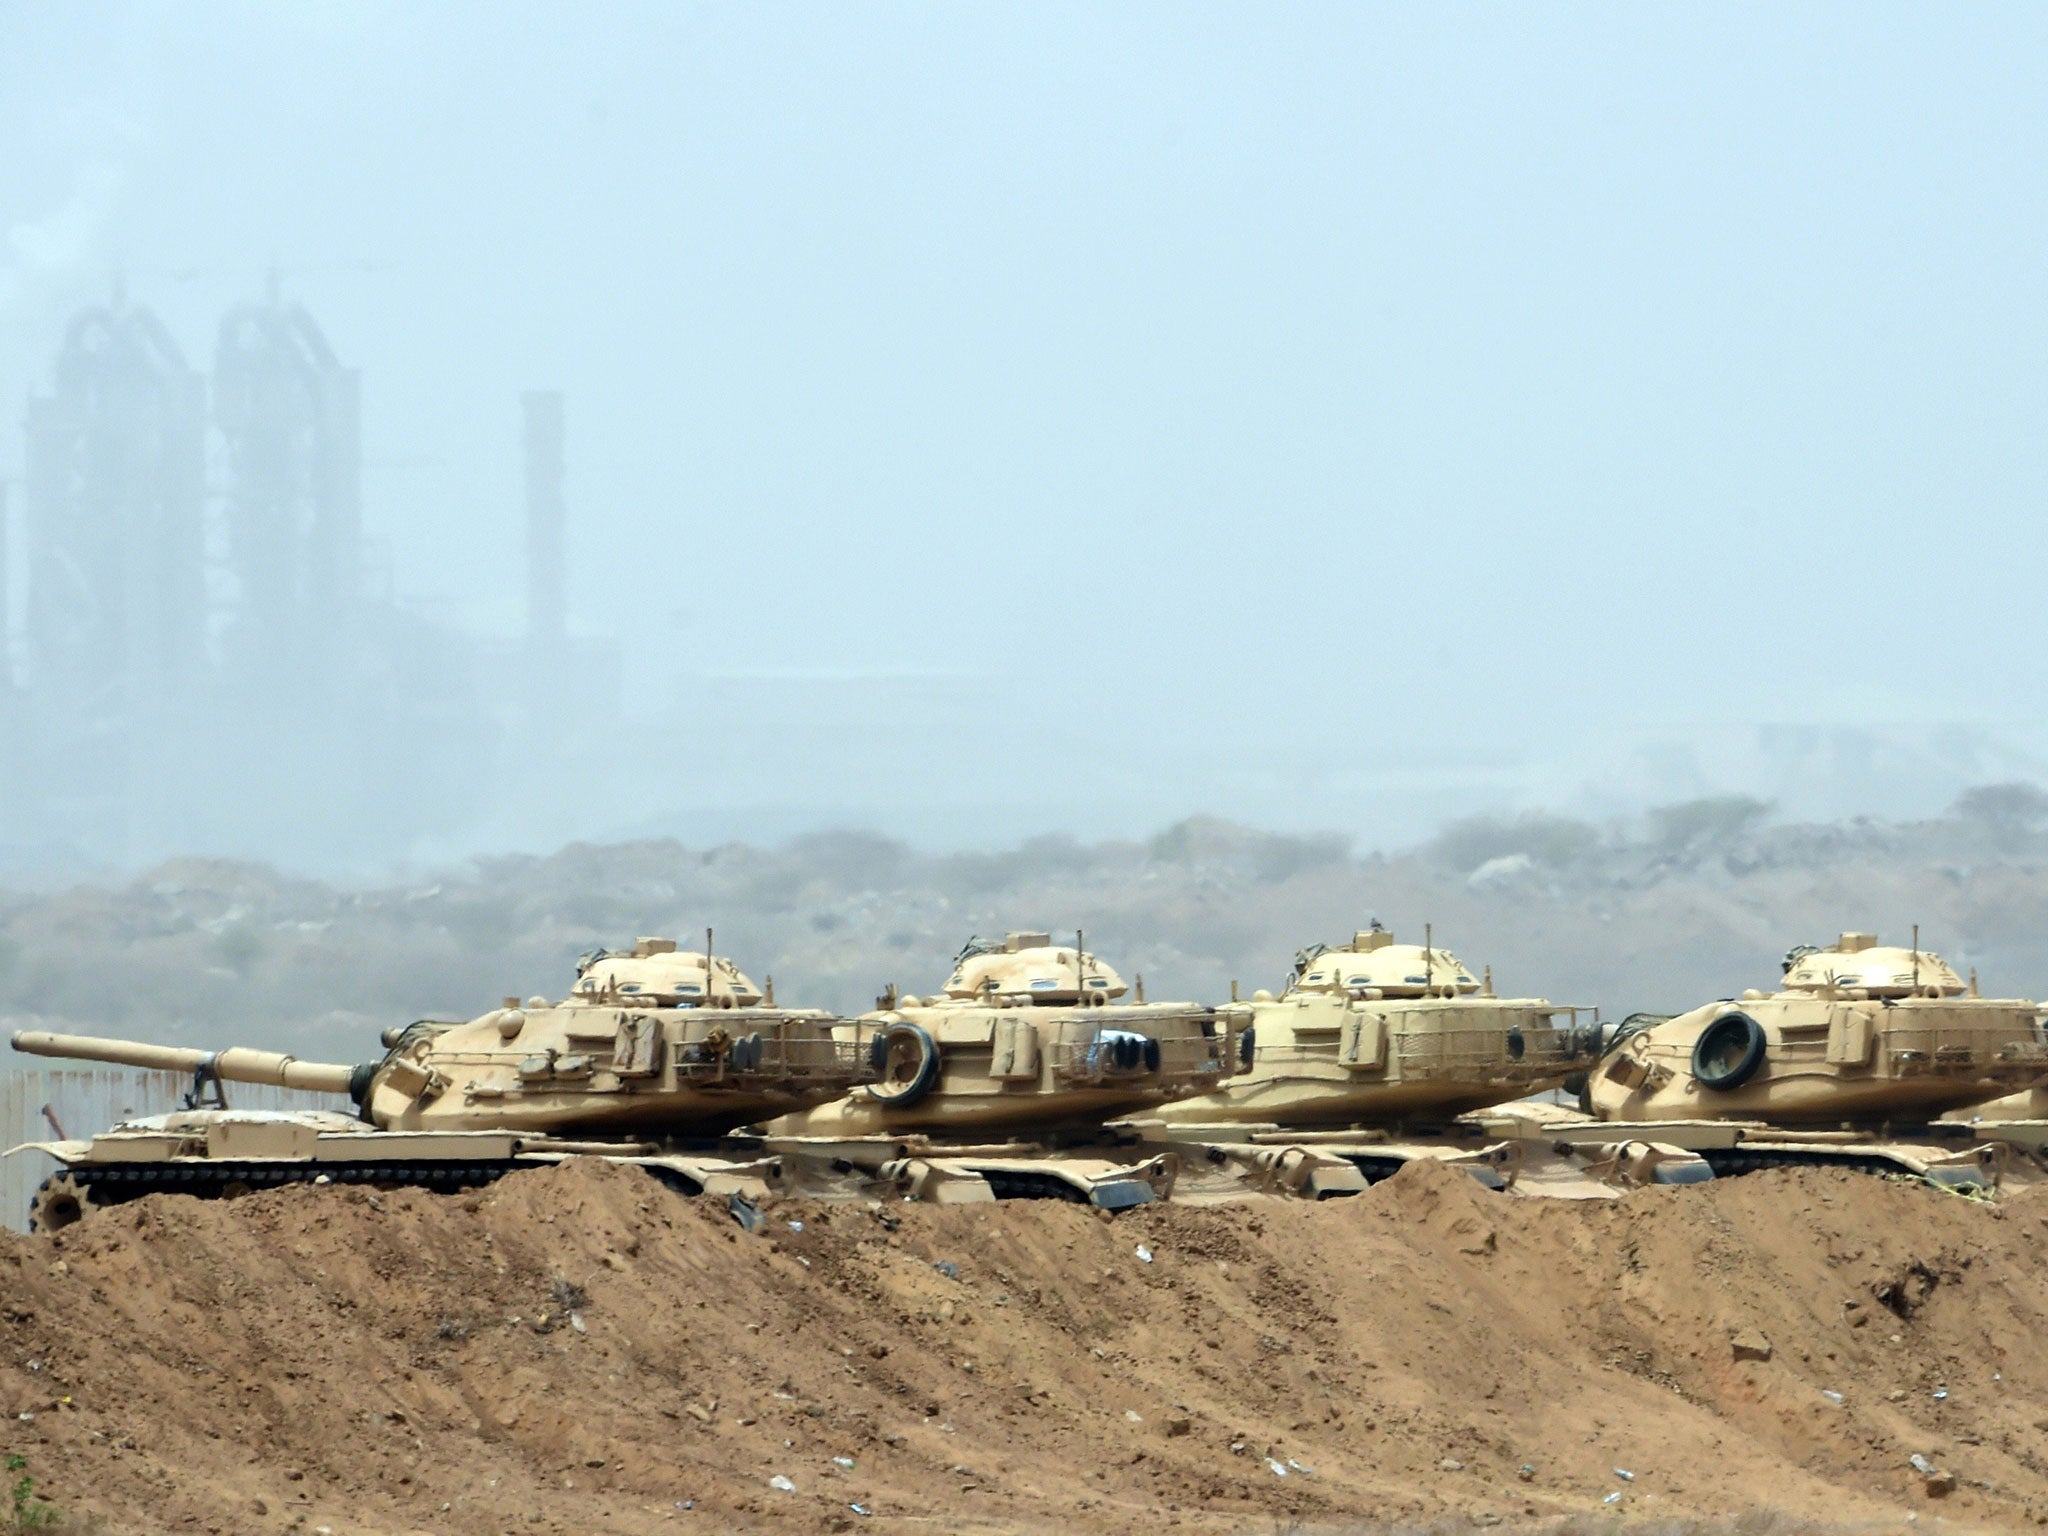 Saudi army tanks are seen deployed near the Saudi-Yemeni border, in southwestern Saudi Arabia, on 9 April, 2015